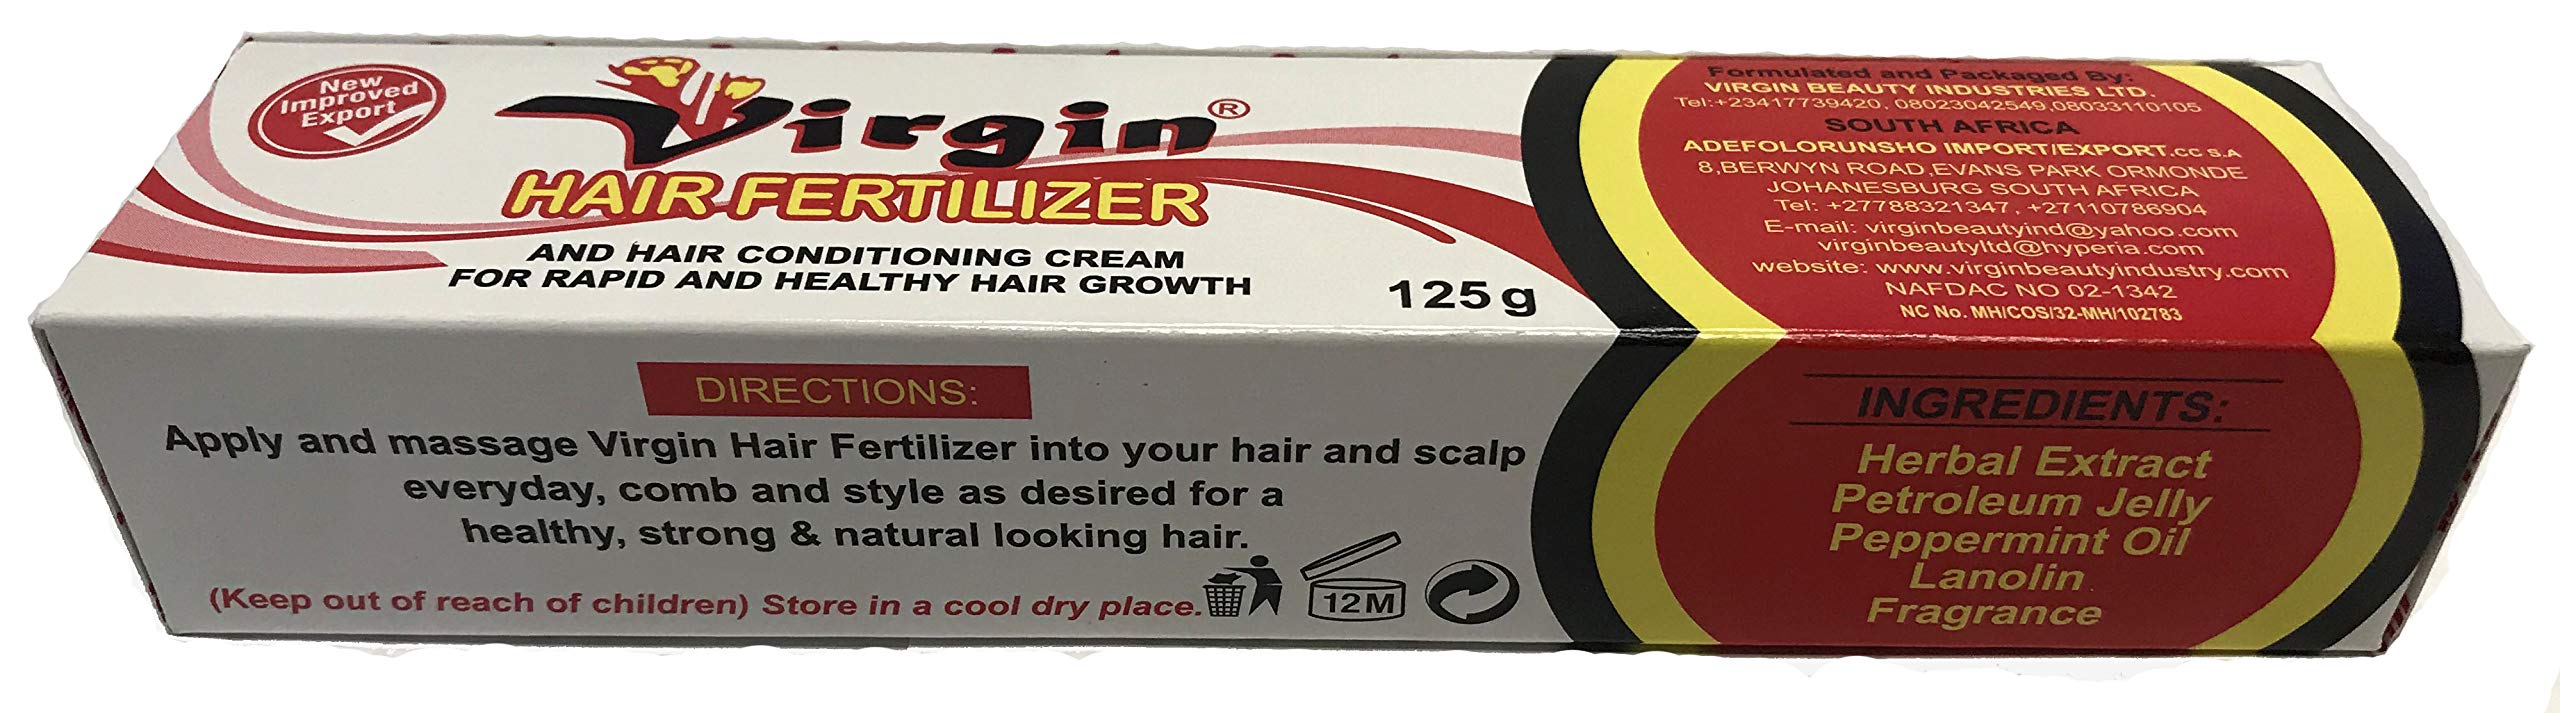 virgin hair fertilizer now wears a new name (2 pc pack), 125g